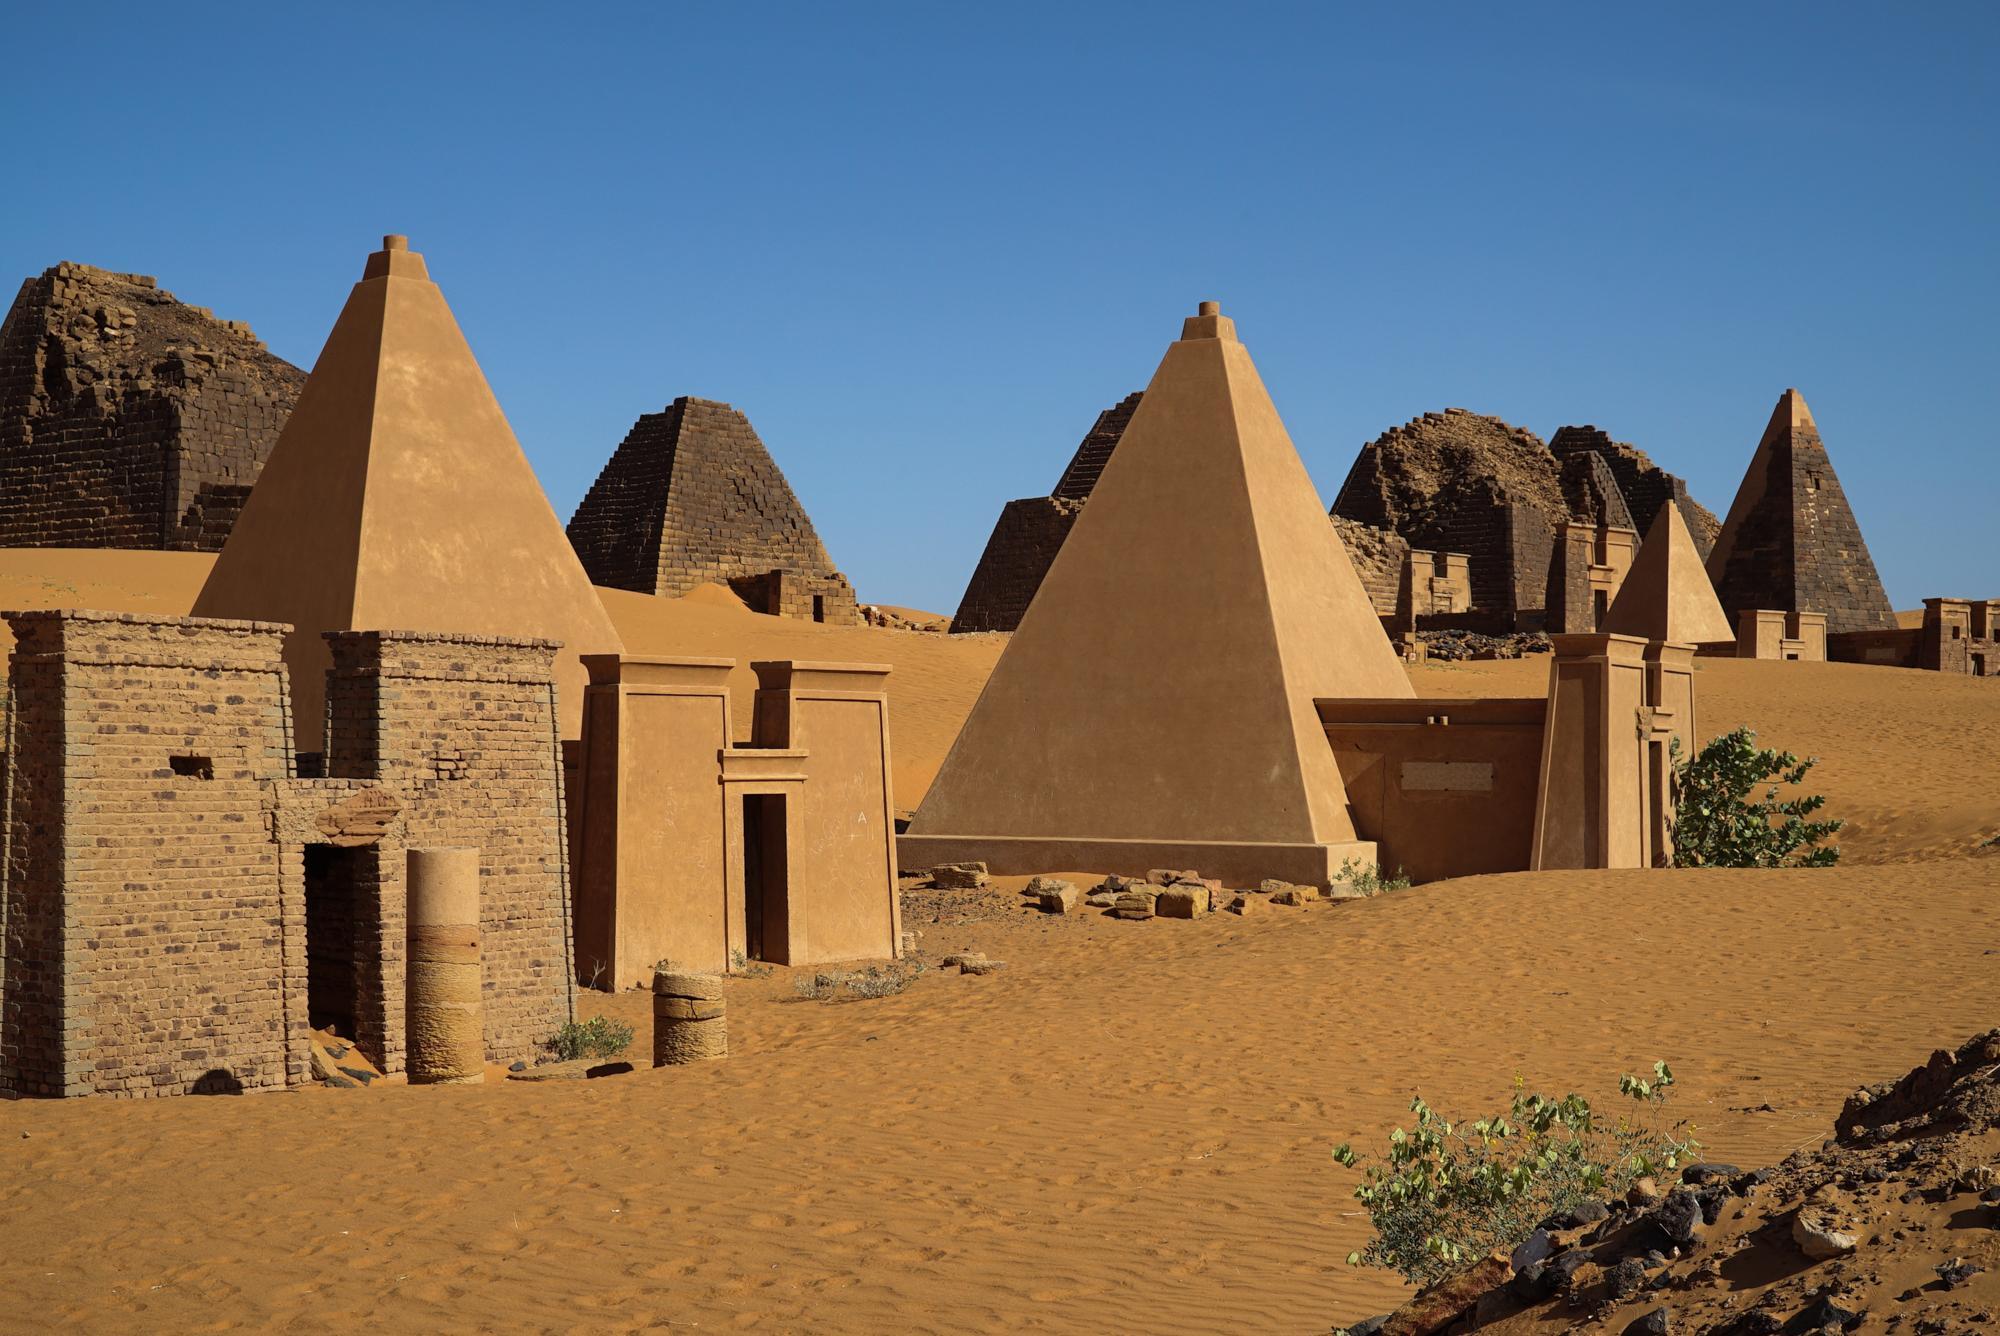 Pictures of Sudan’s forgotten Nubian pyramids